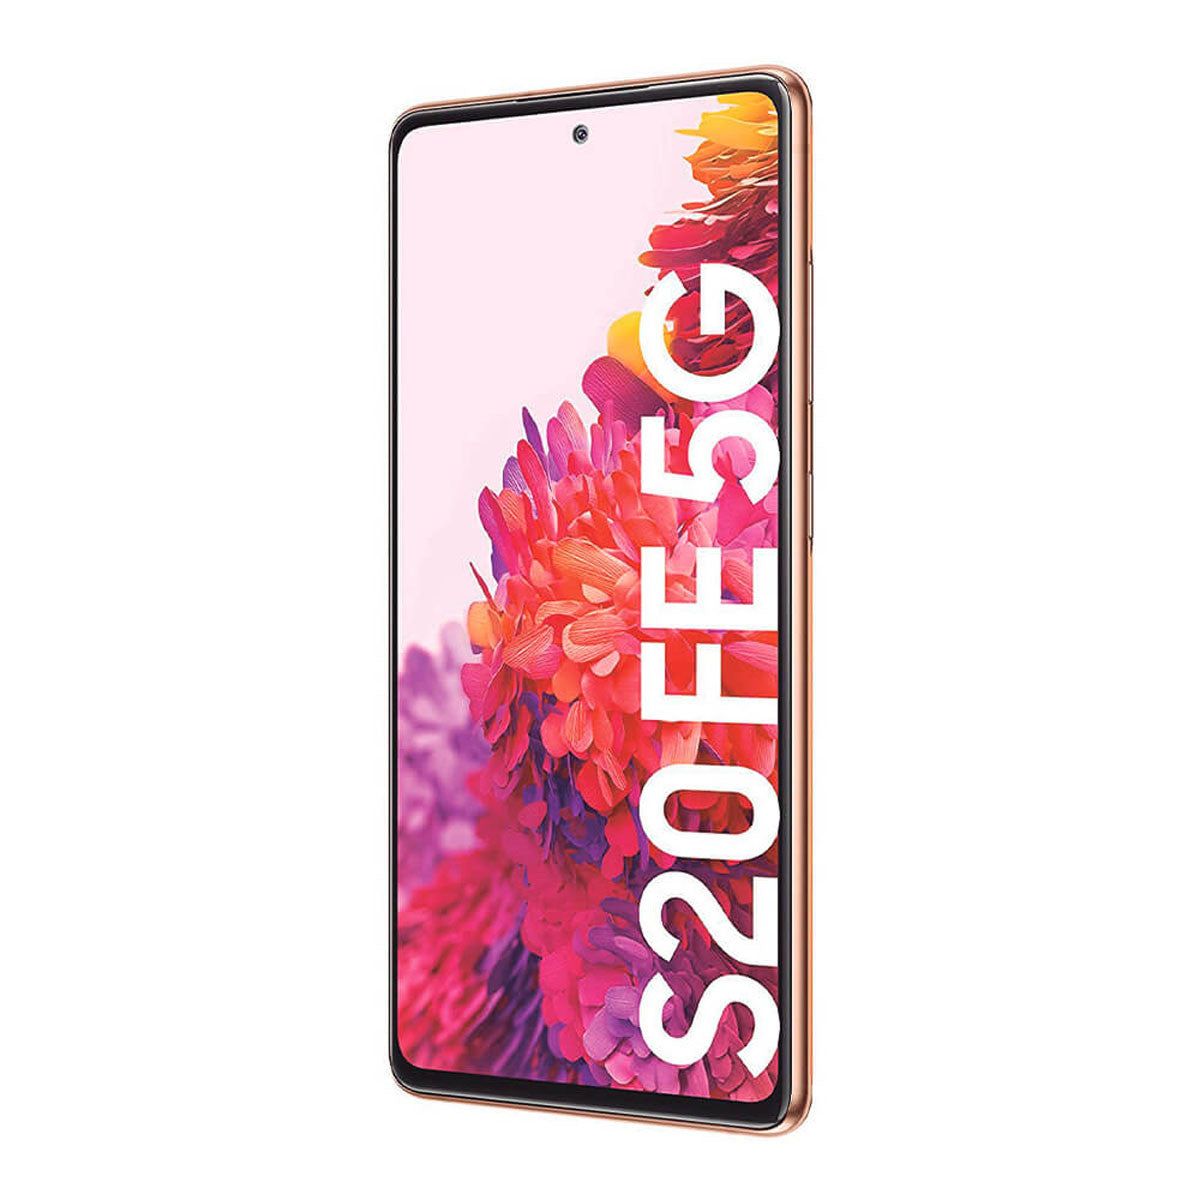 Samsung Galaxy S20 FE 5G 6GB/128GB Naranja (Cloud Orange) Dual SIM G781B Smartphone | Samsung